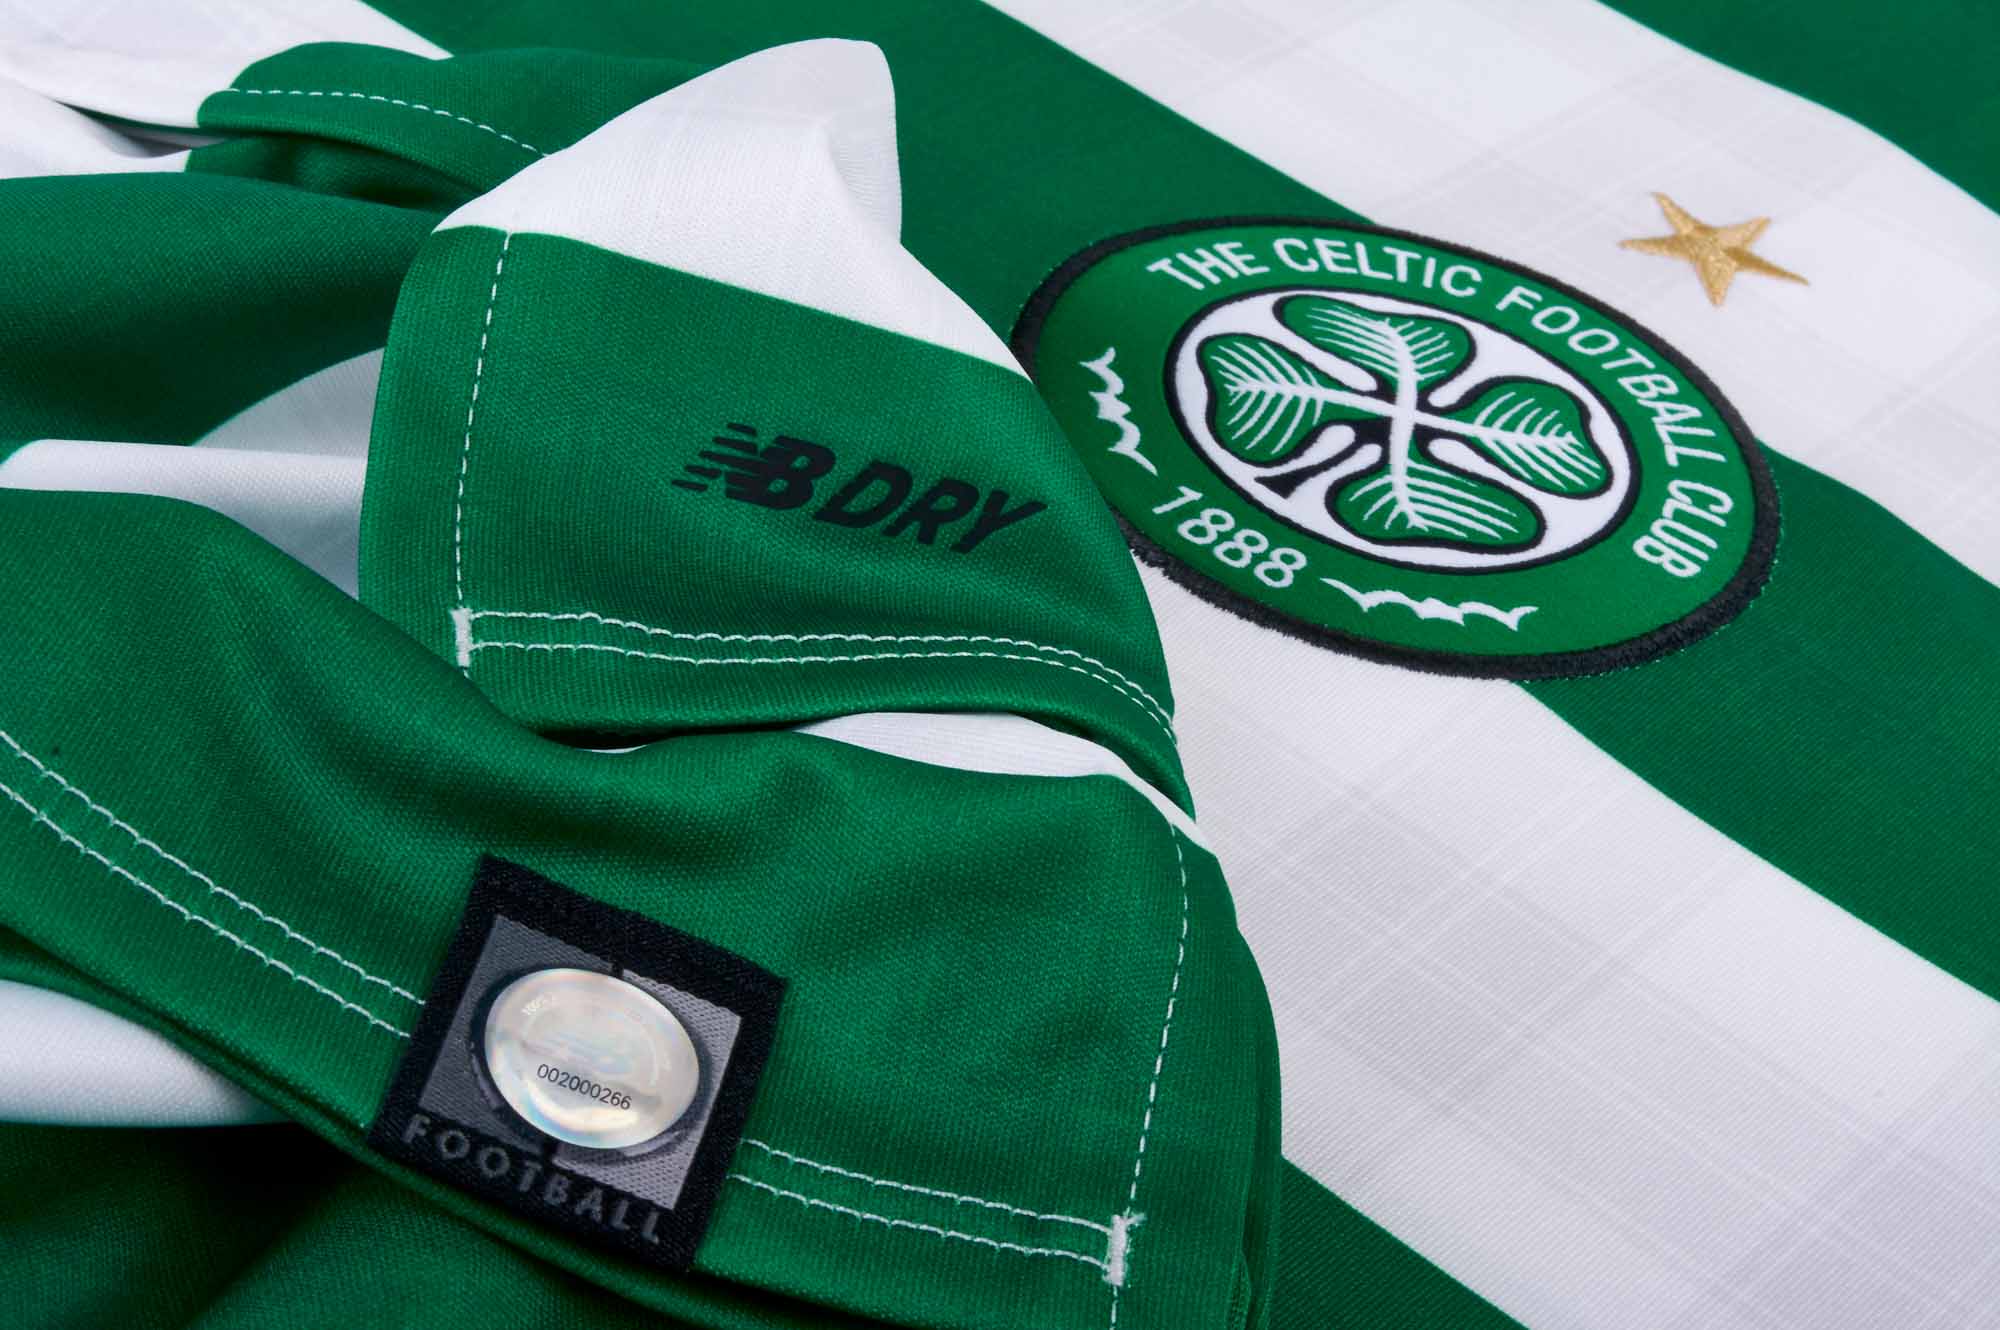 NEW BALANCE MT930084 Celtic(Glasgow) Football Soccer Third Shirt 2019-20  Size Large NEW